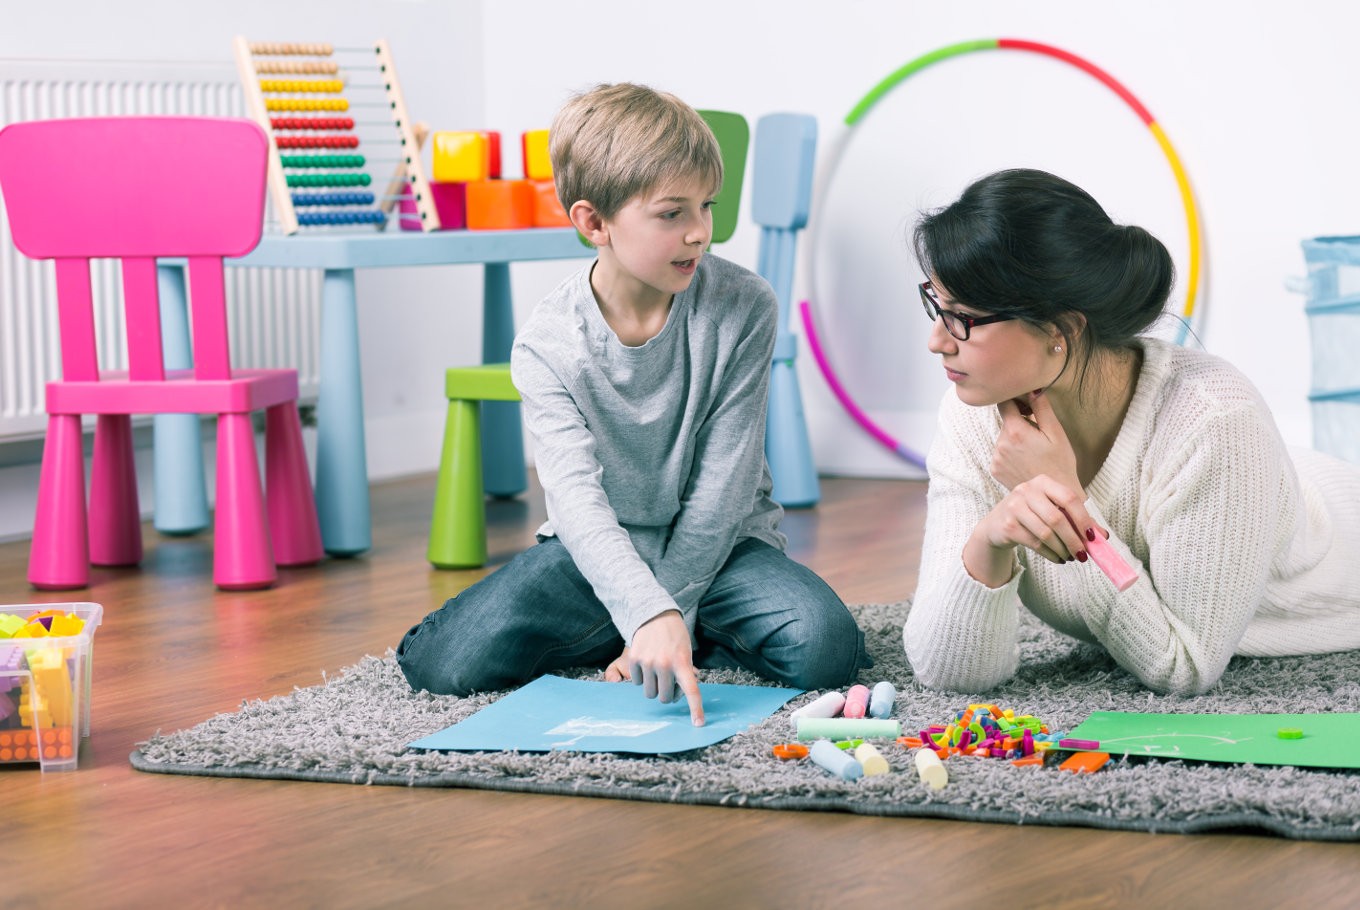 Homeschooling gives children motivation, become more creative: Psychologist